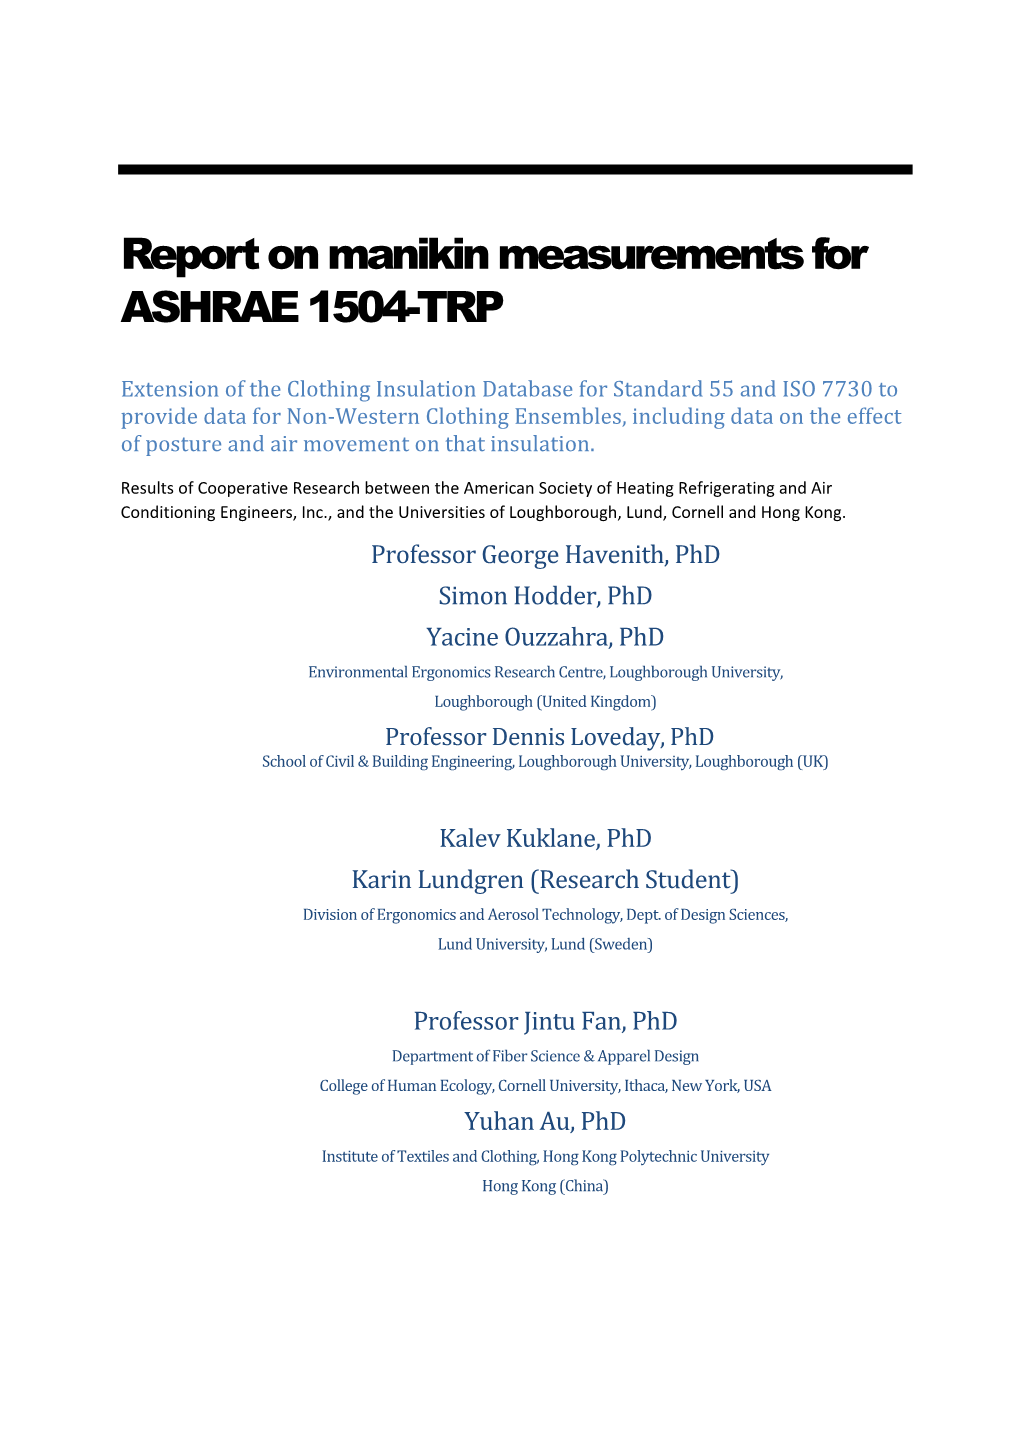 Report on Manikin Measurements for ASHRAE 1504-TRP